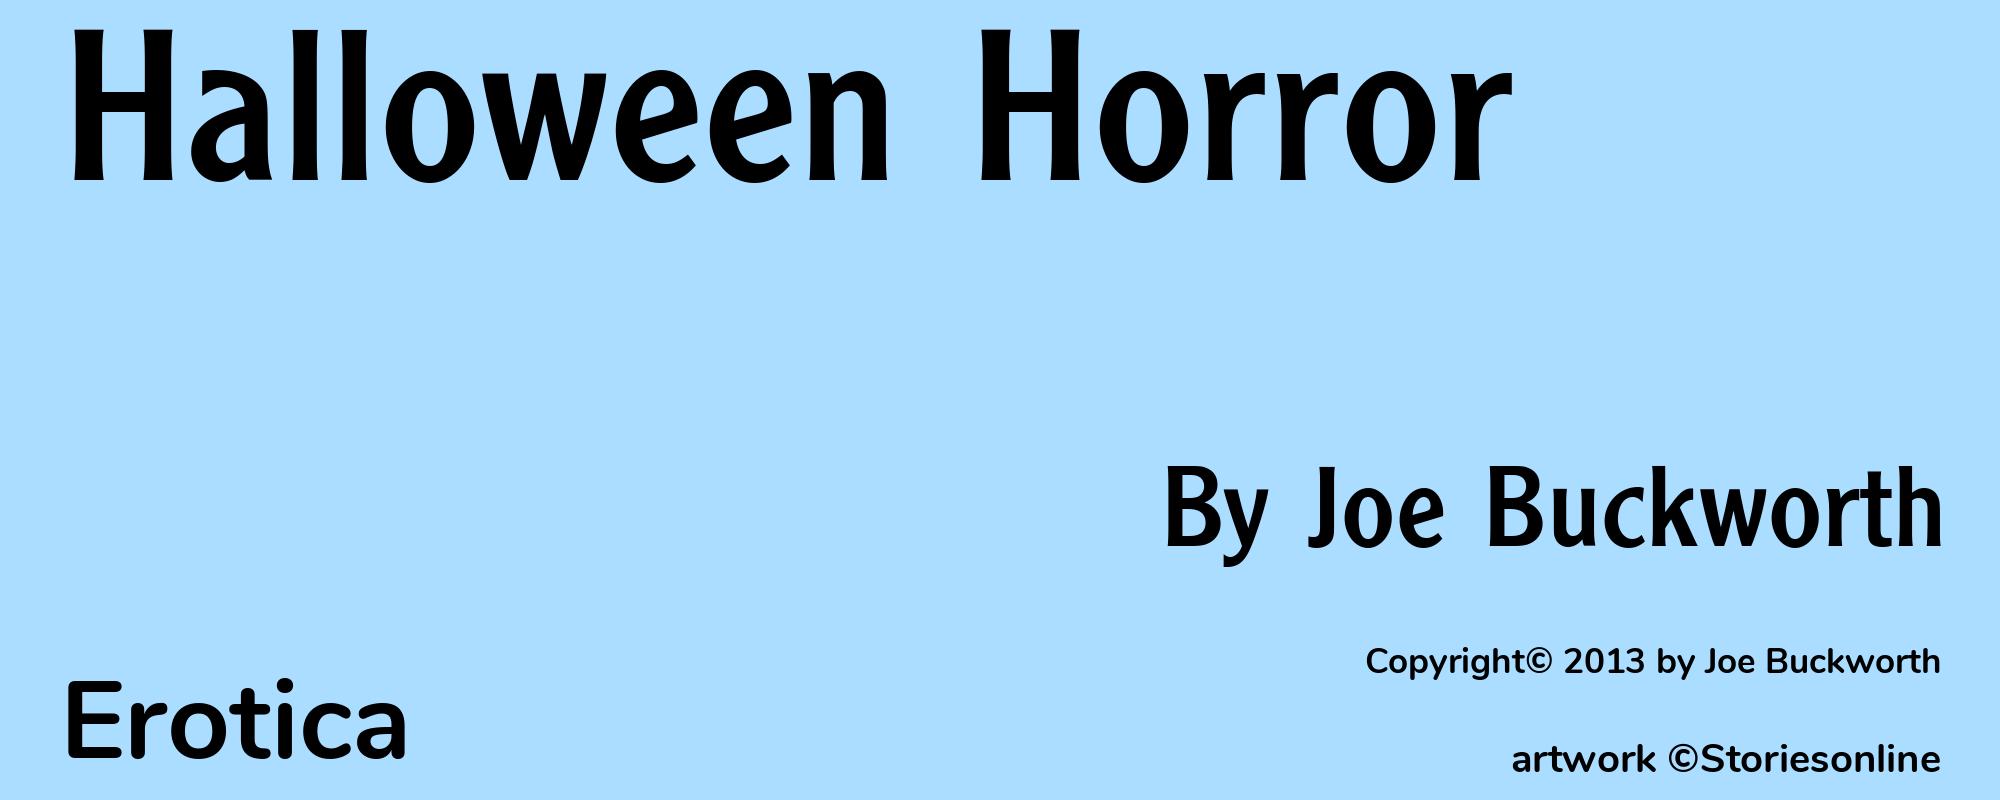 Halloween Horror - Cover